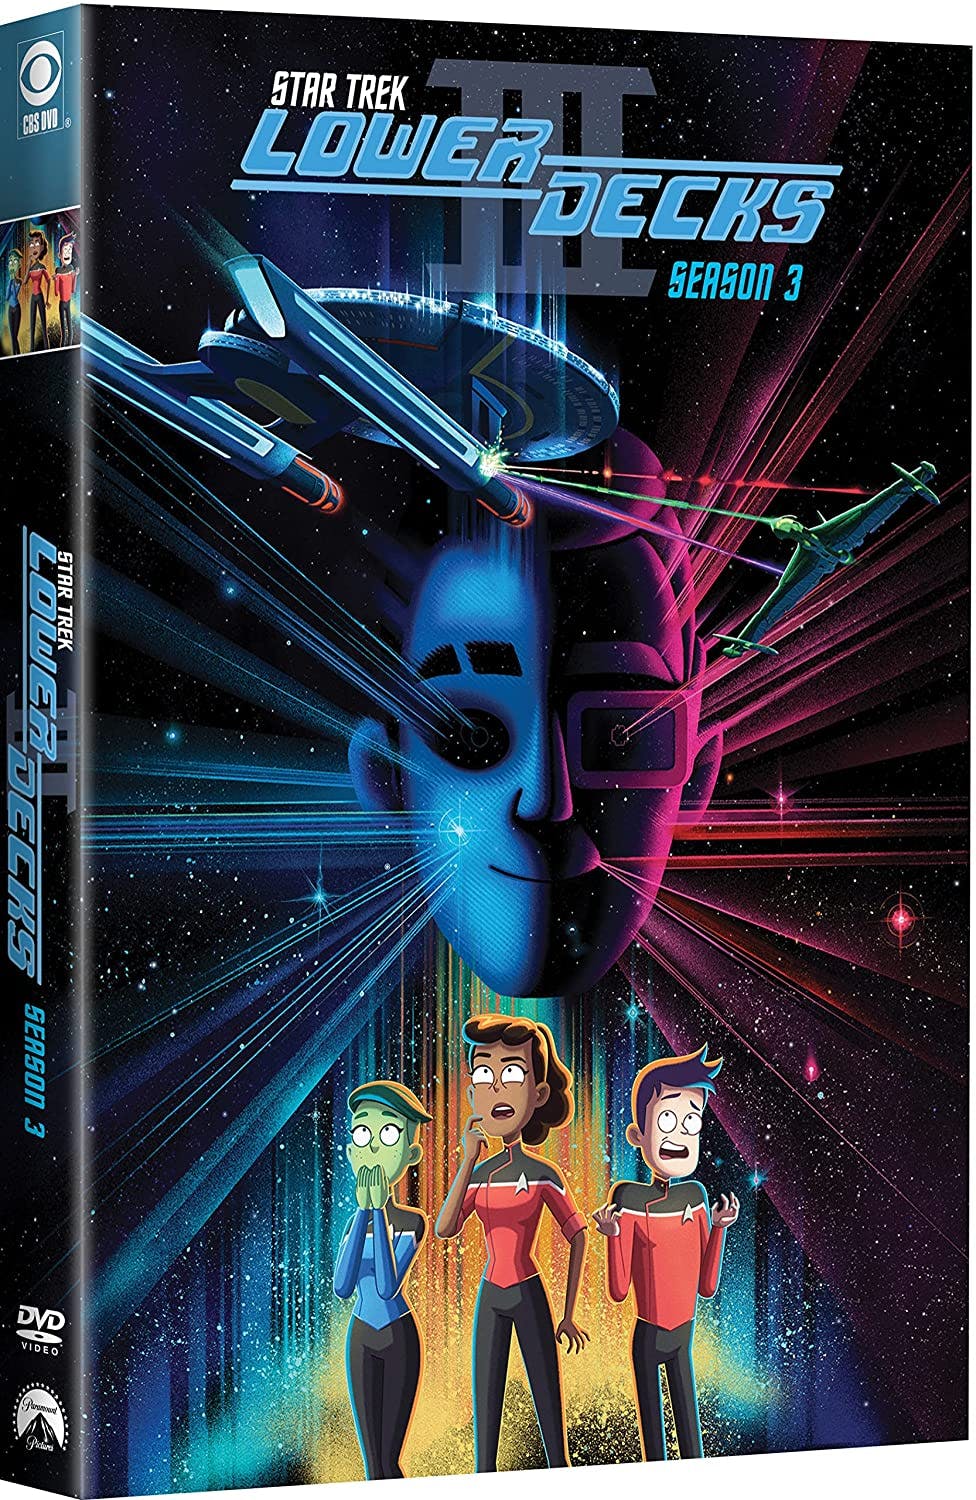 Star Trek: Lower Decks Season 3 DVD packshot